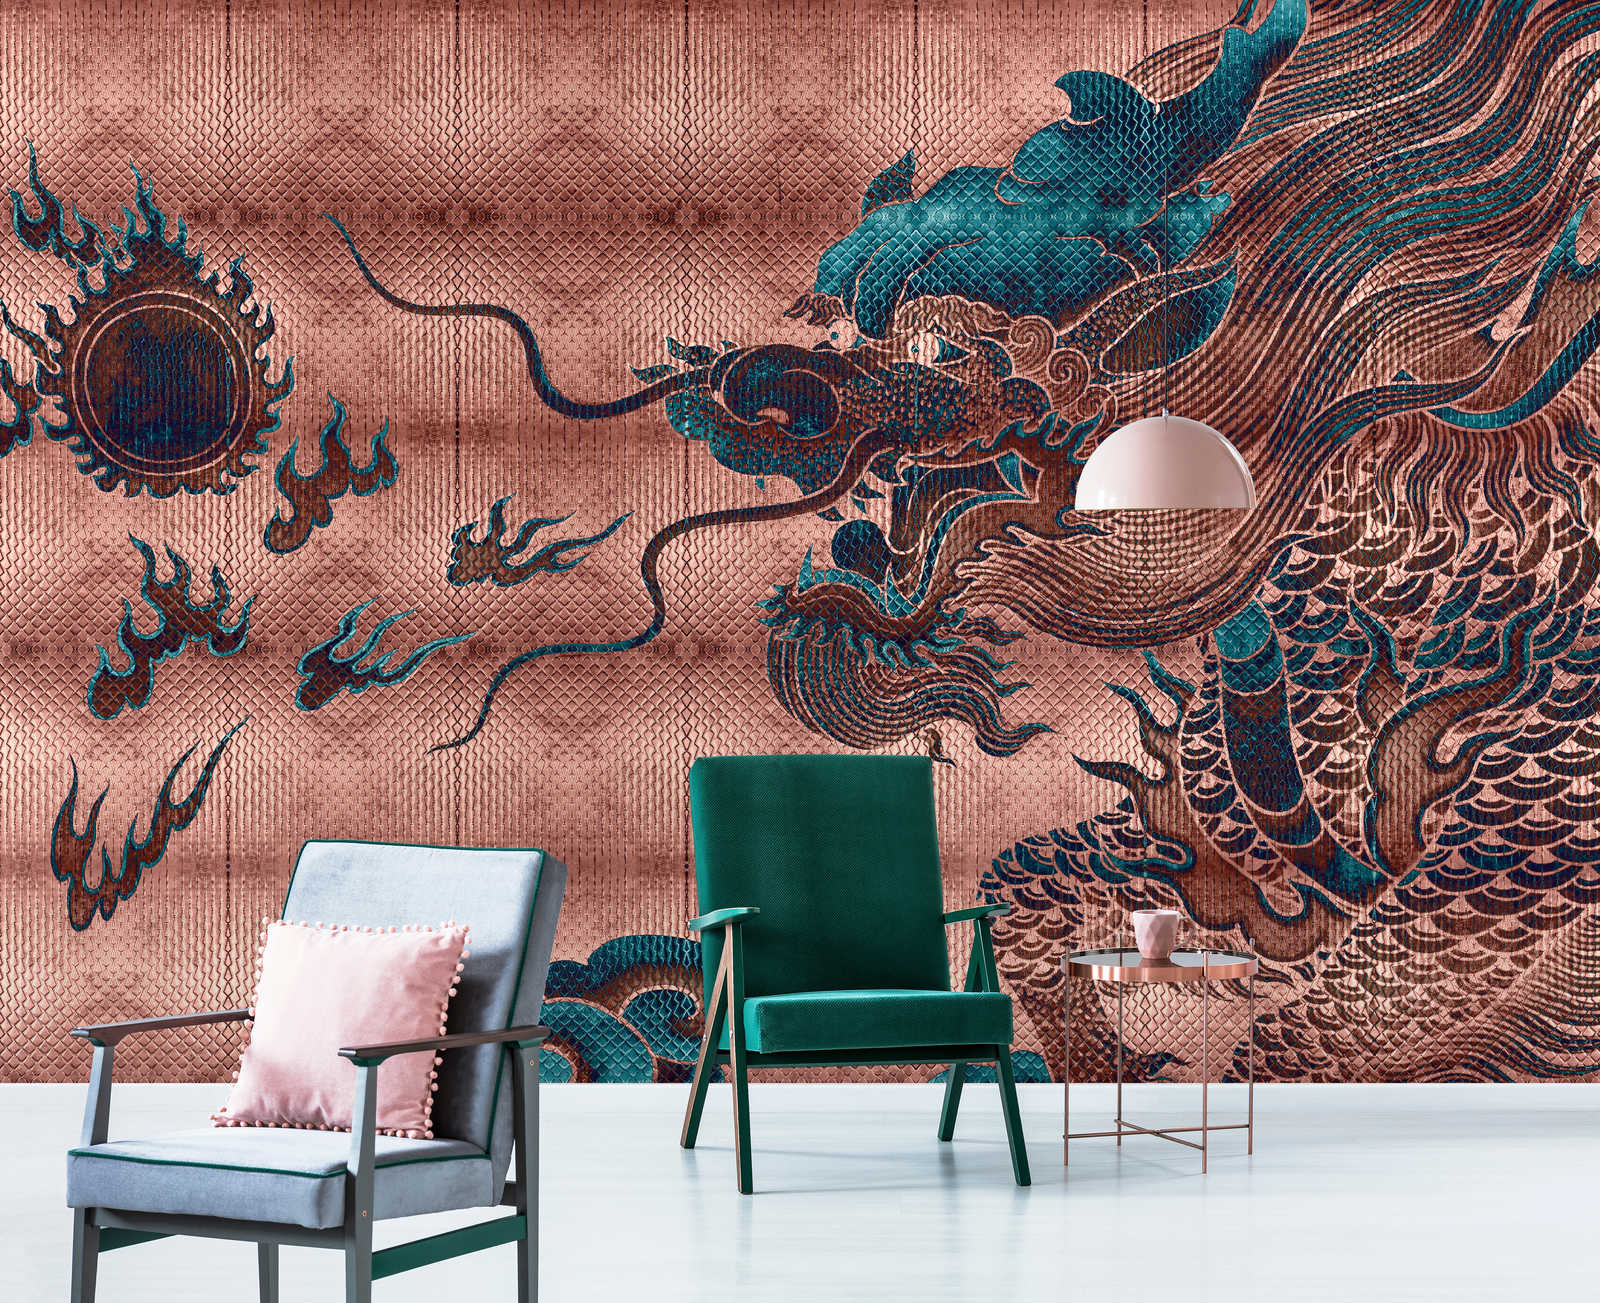             Shenzen 1 - Mural de pared Dragón de estilo asiático con colores metálicos
        